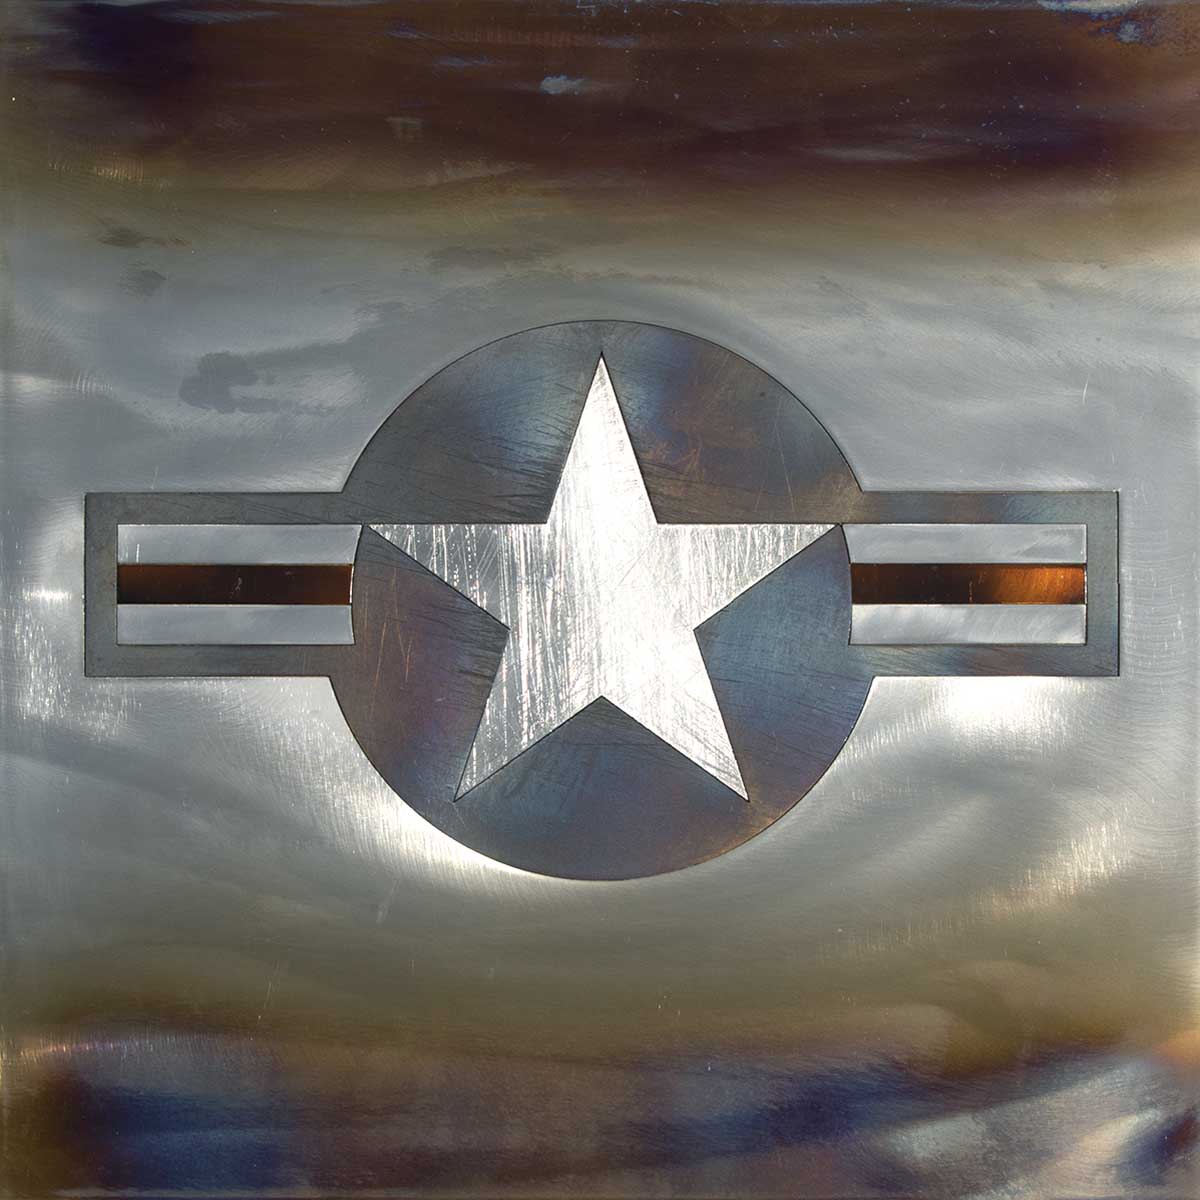 United States Air Force steel roundel artwork.